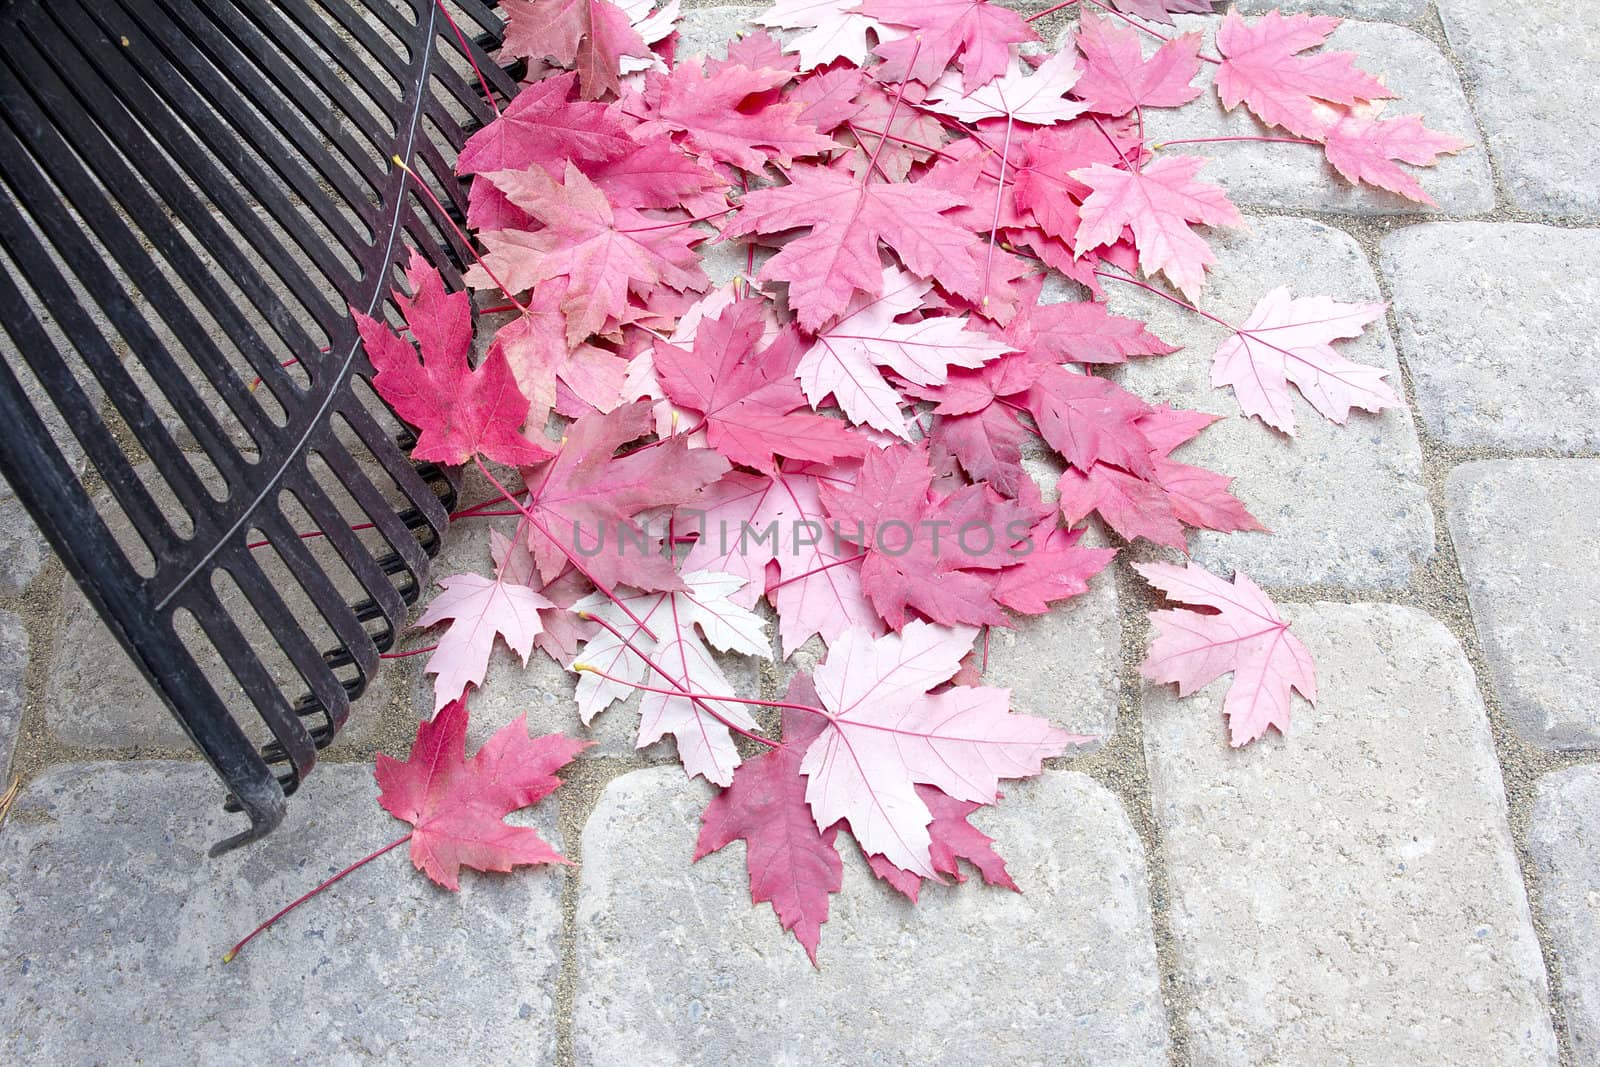 Raking Fallen Red Maple Tree Leaves from Backyard Stone Pavers Patio in Autumn